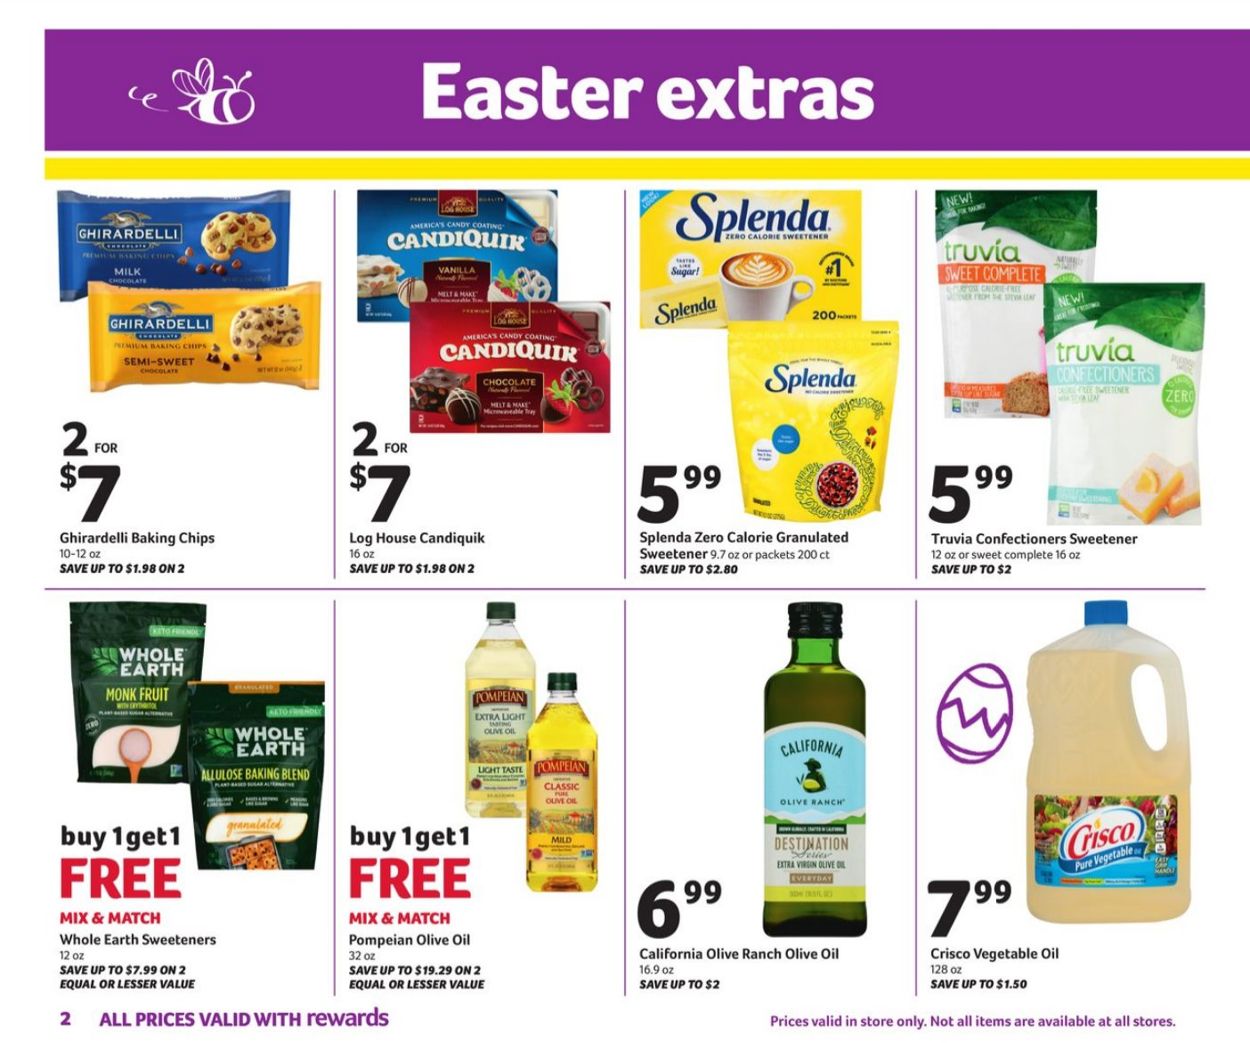 Catalogue Harveys Supermarket - Easter 2021 Ad from 03/17/2021